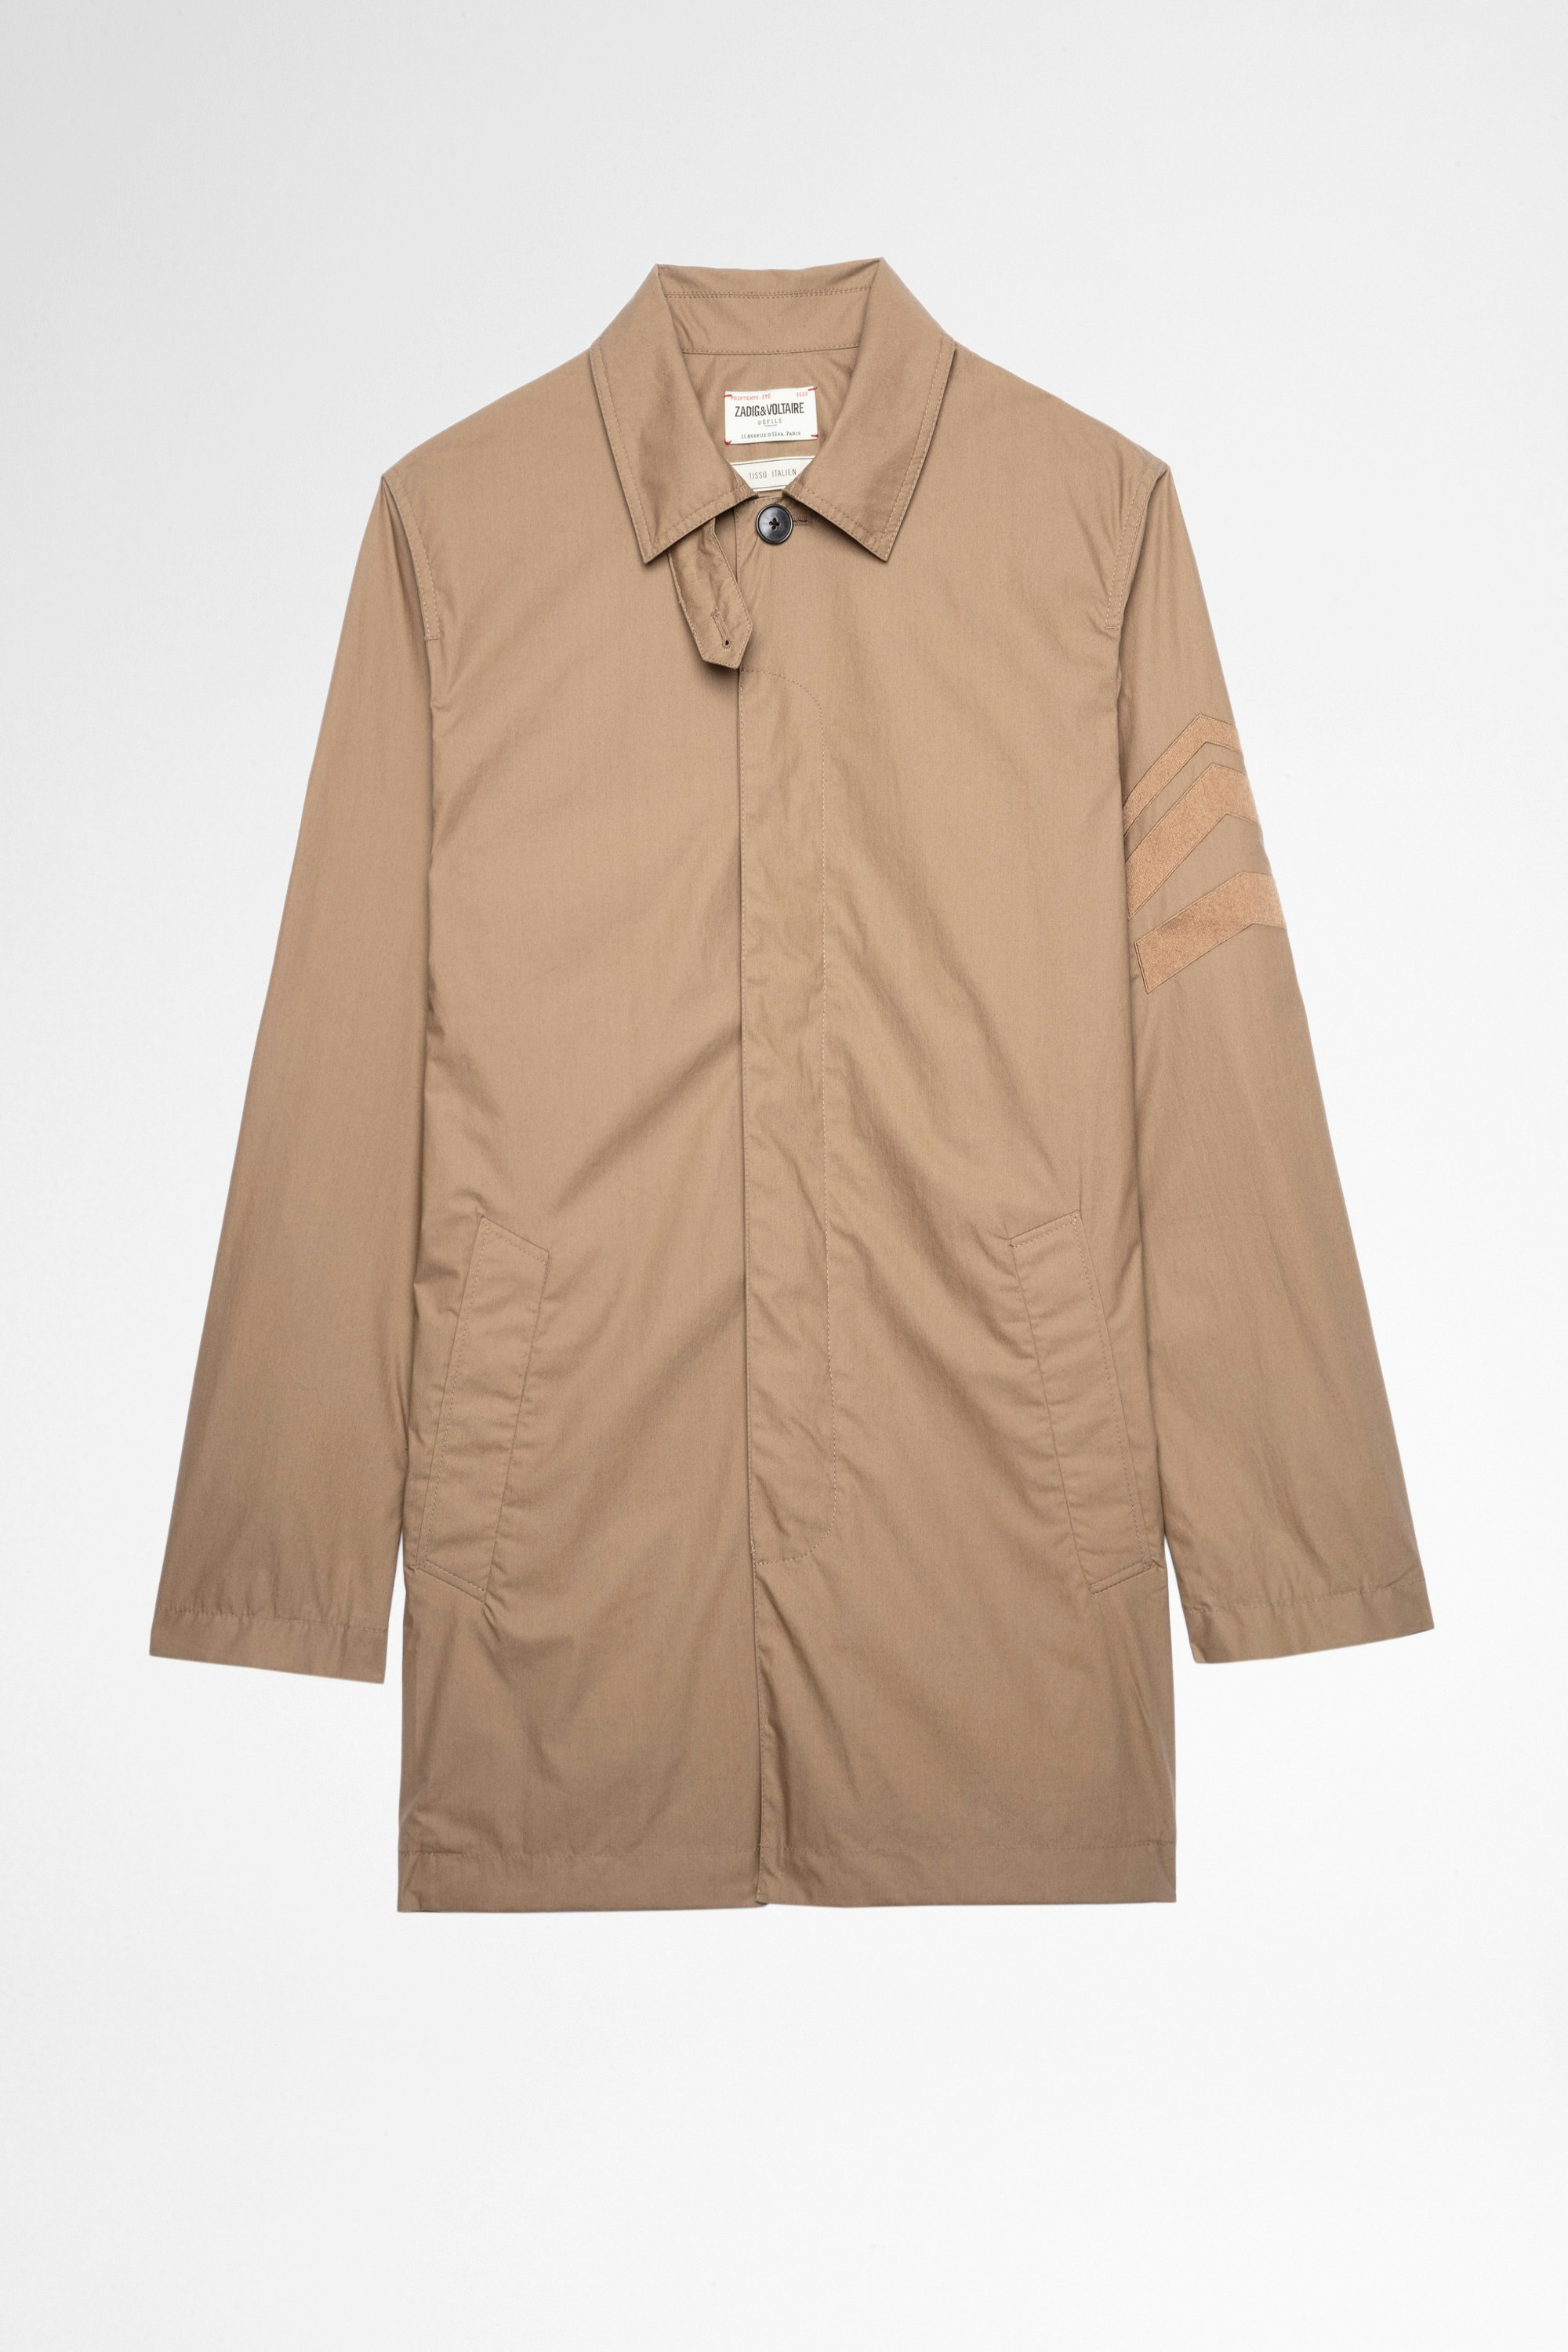 Martin Jacket Men's buttoned jacket in beige cotton